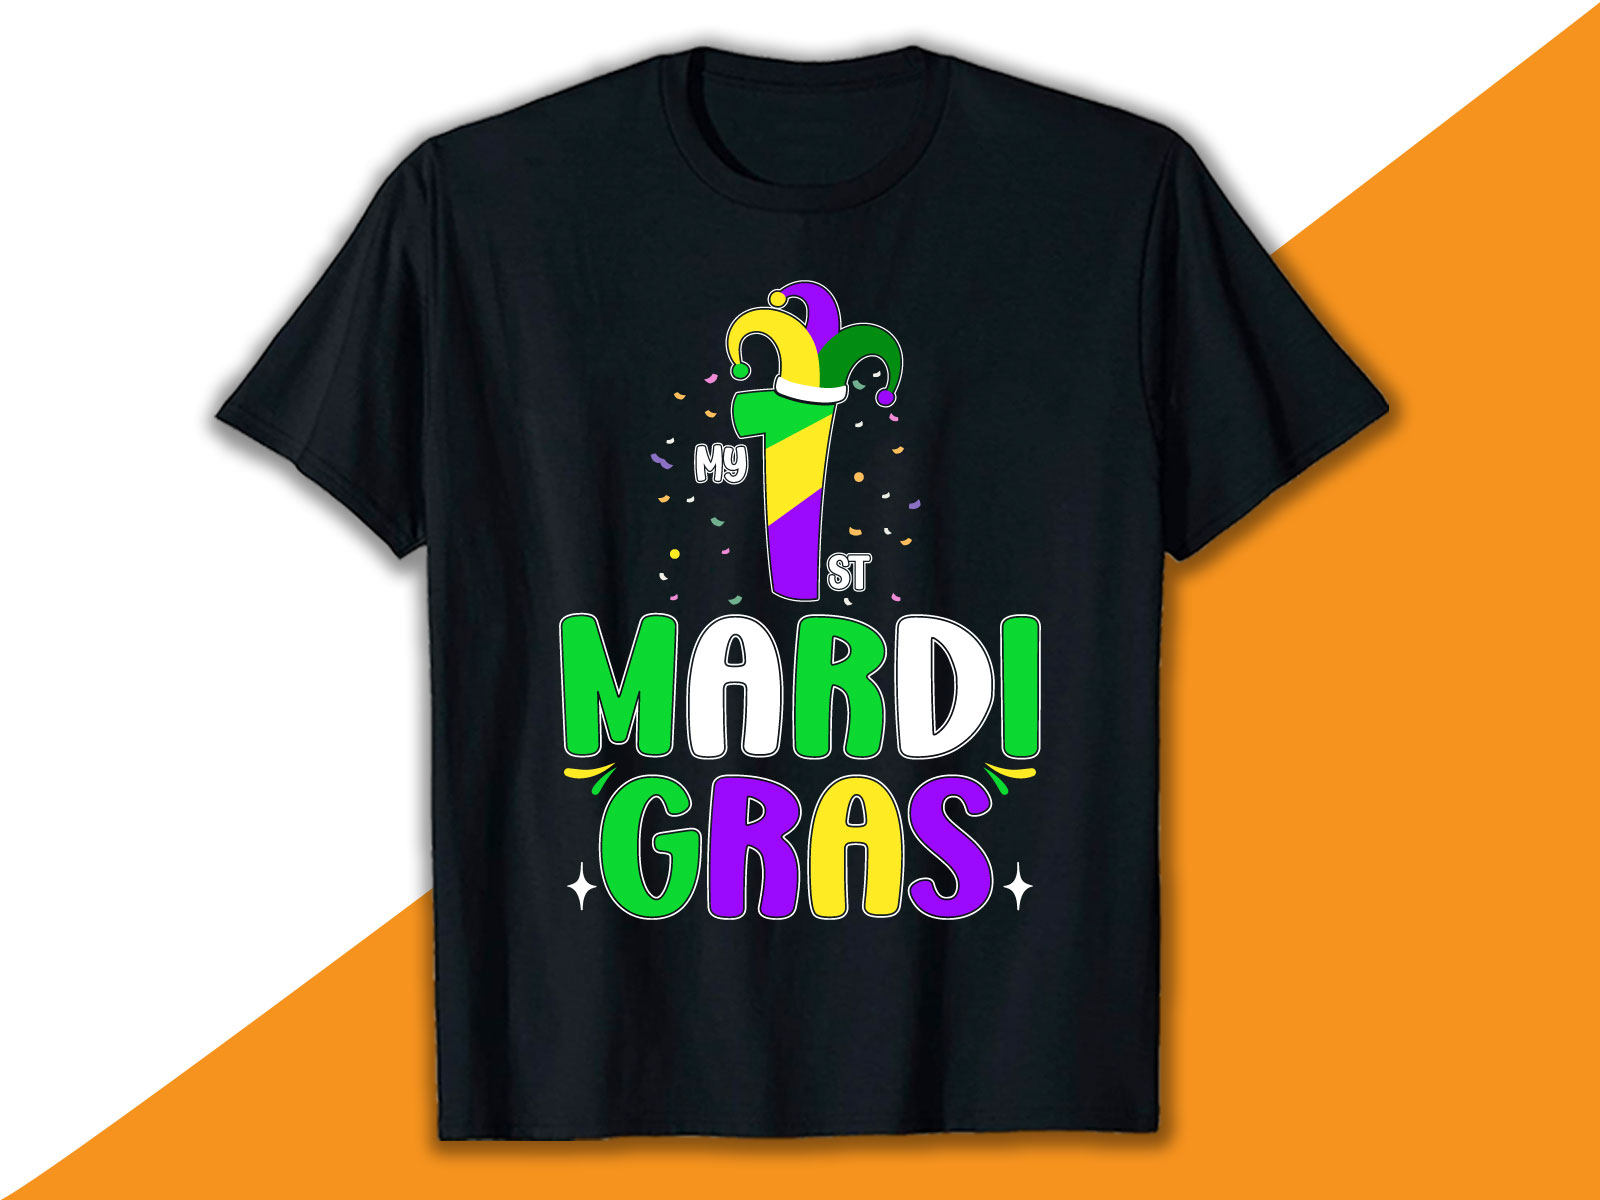 Mardi Gras T-shirt Designs by Fardin Islam Fahim on Dribbble